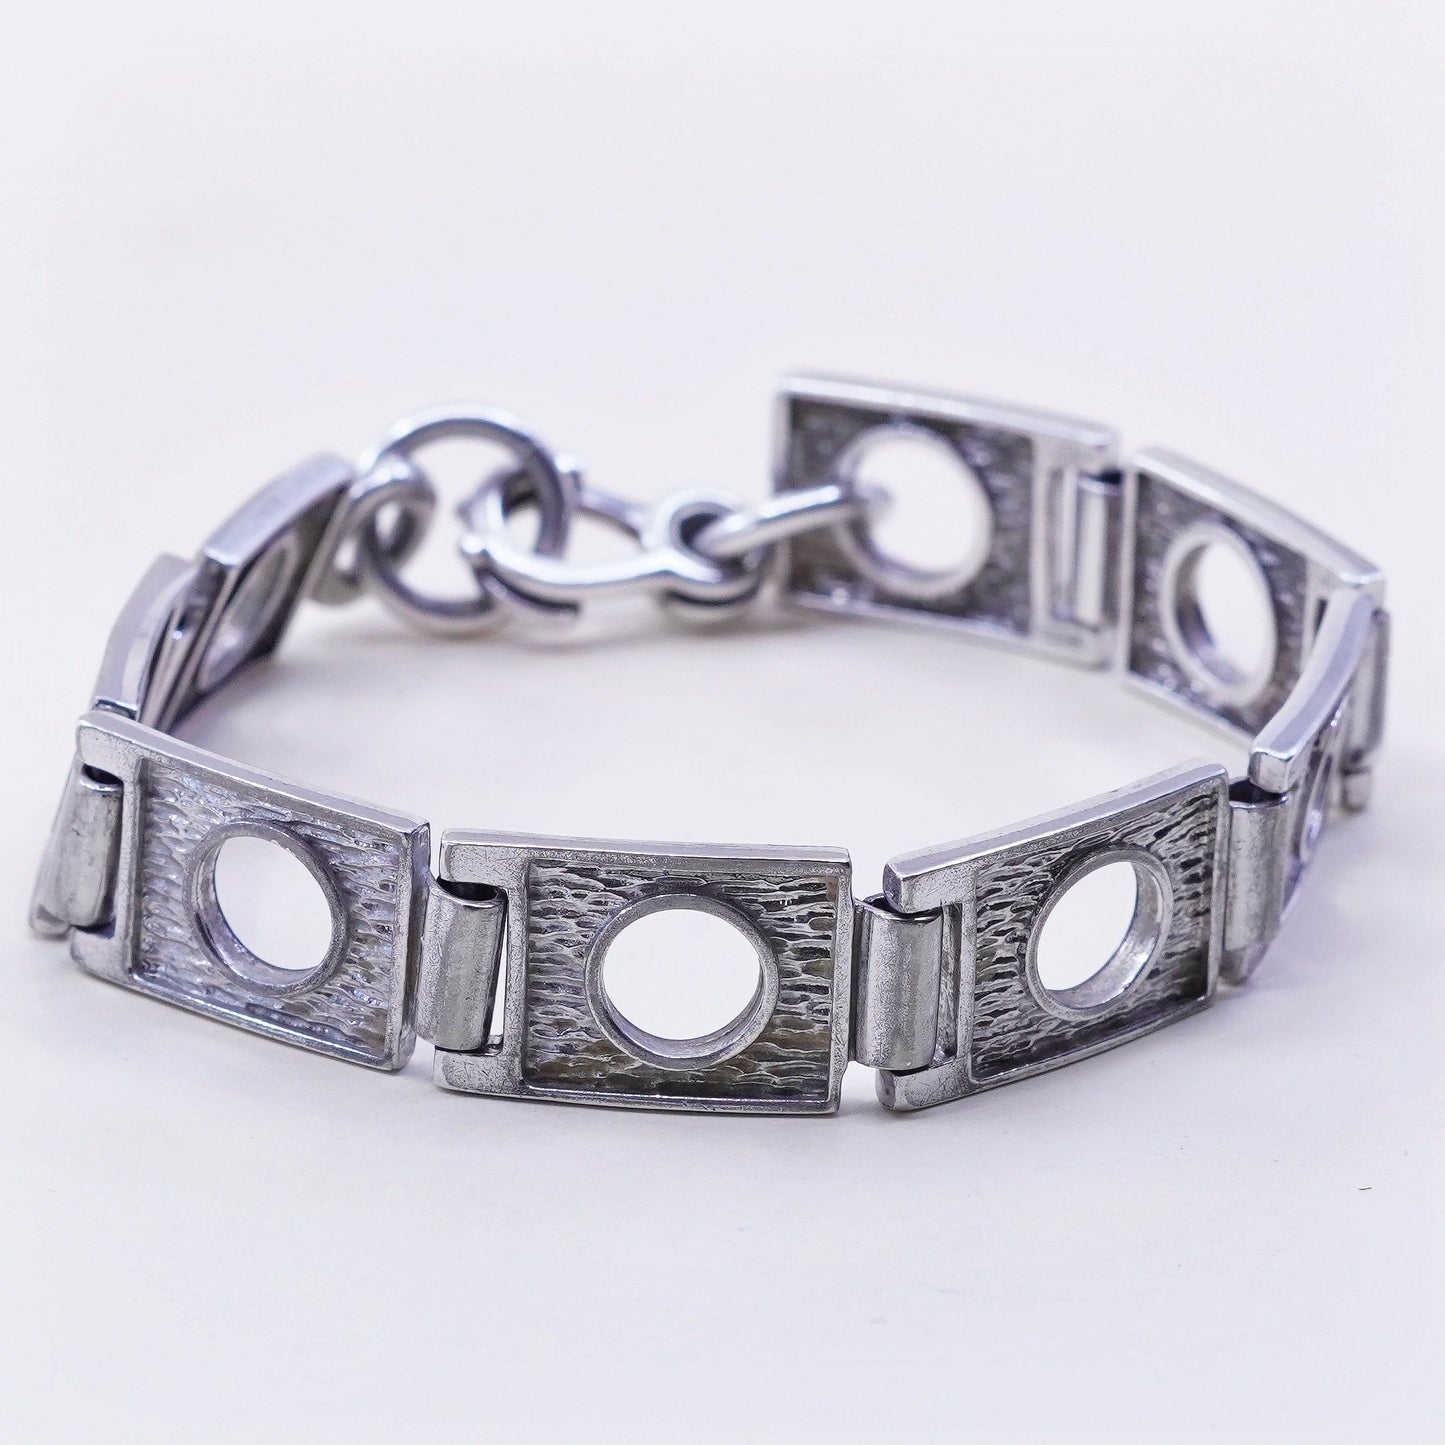 7”, vtg modern sterling silver tennis bracelet textured 925 square circle chain